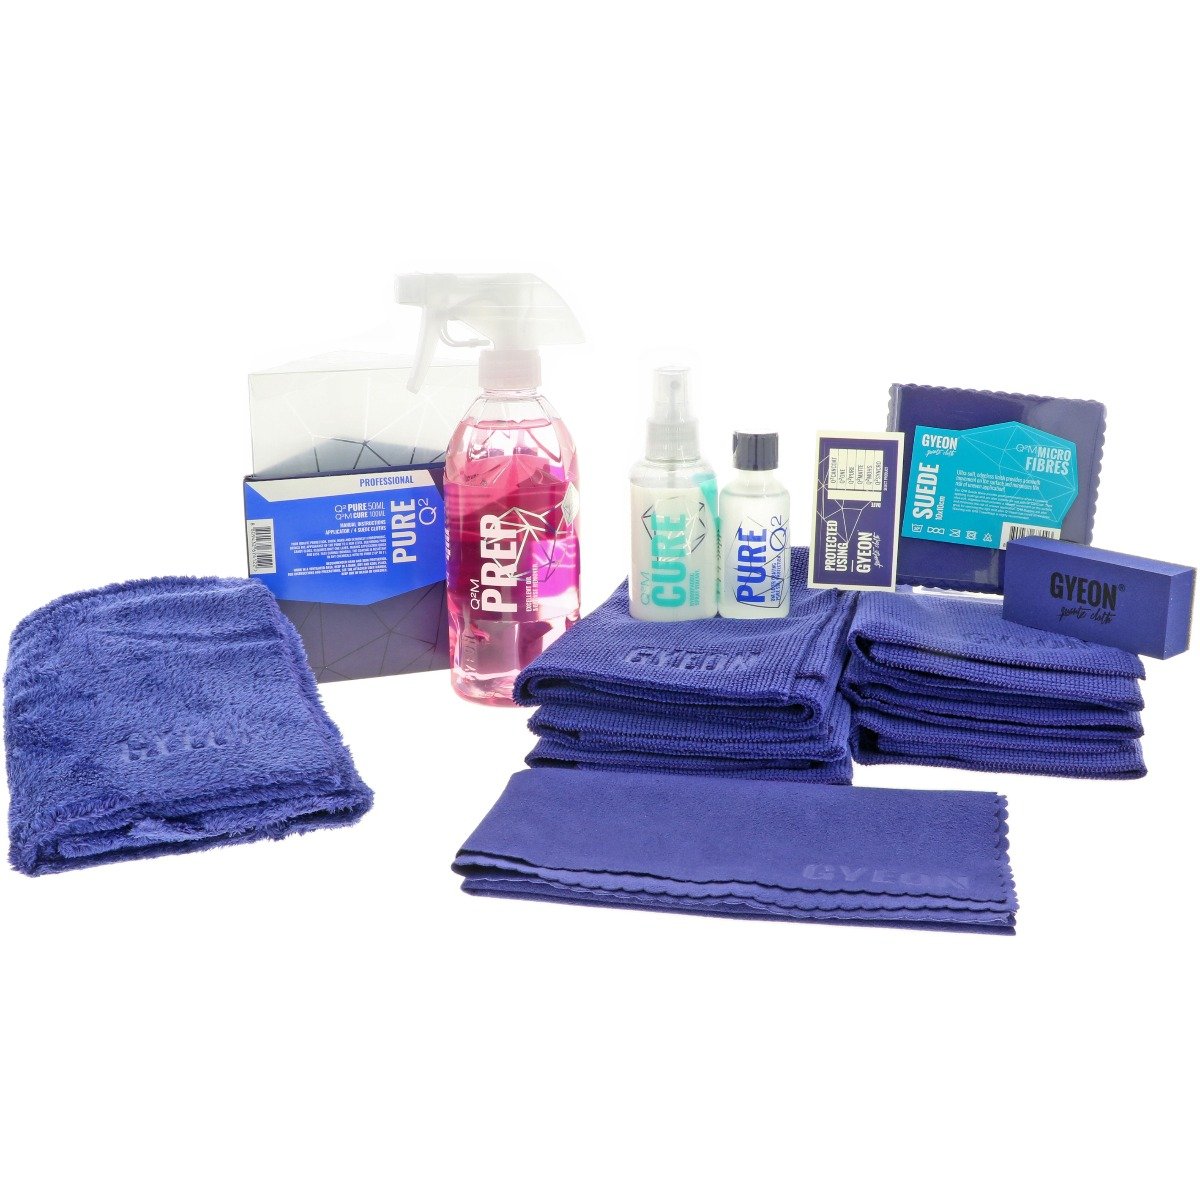 Q² Pure 50ml Essentials Protection Kit